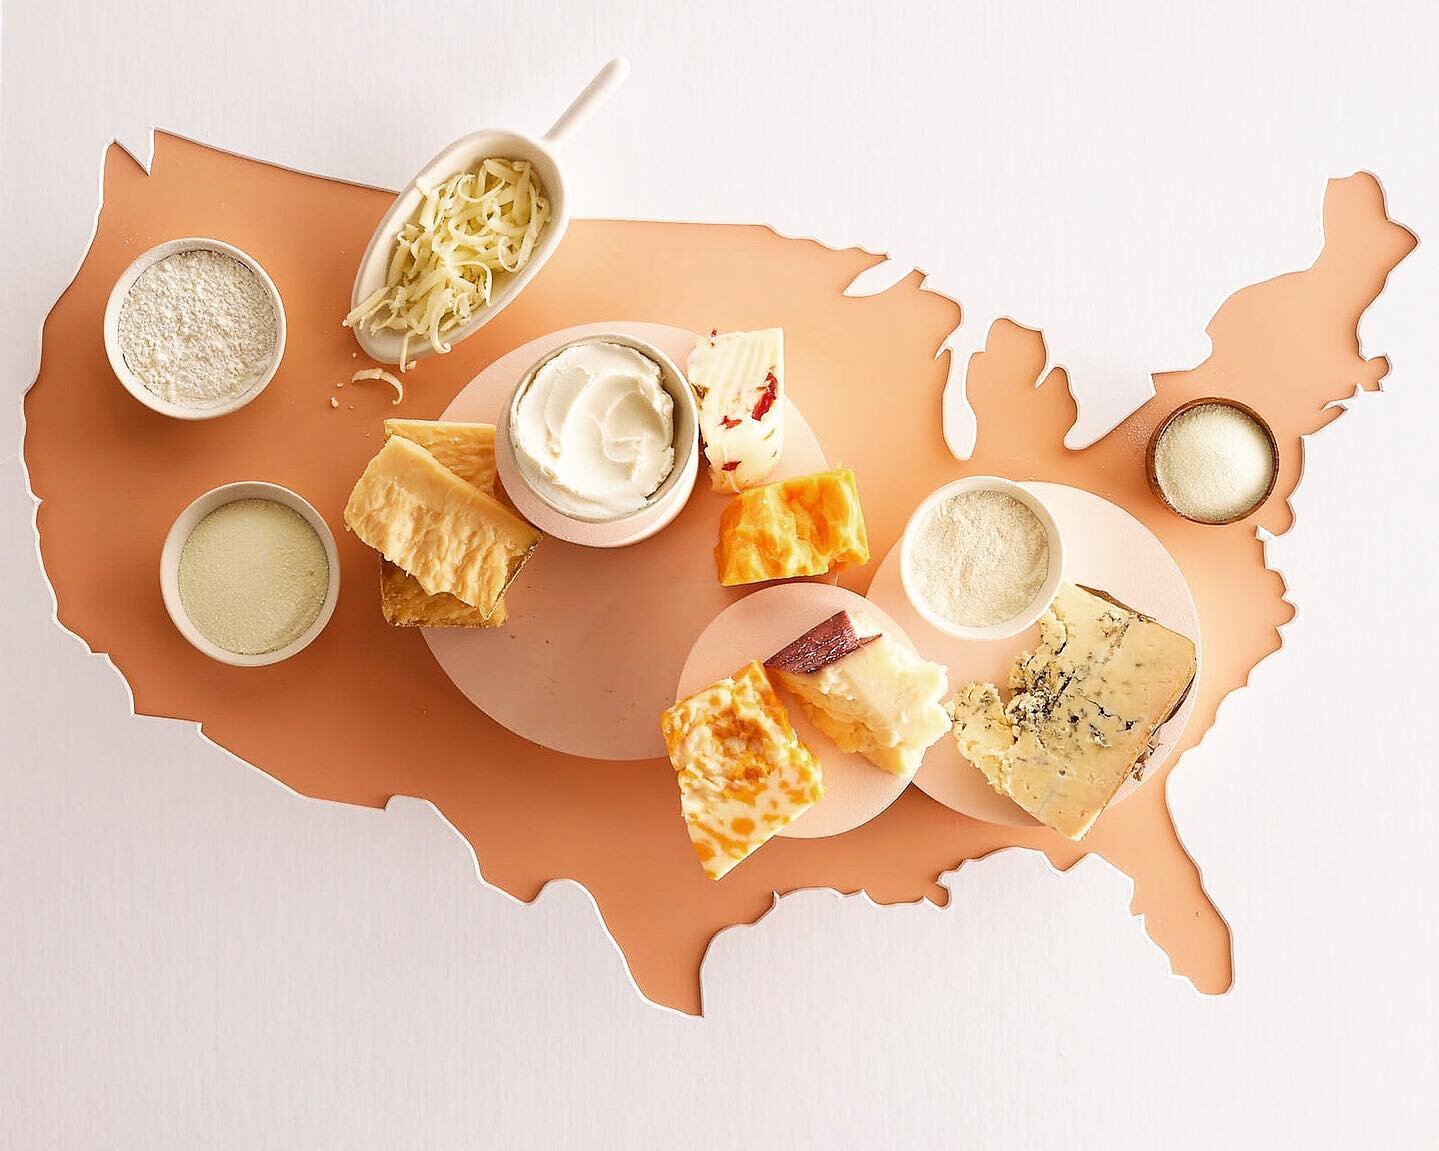 Cheese 🧀 US Dairy 

#cheese #usdairy #foodphotography #dairy #shotatingredient #photographer #losangeles #studio